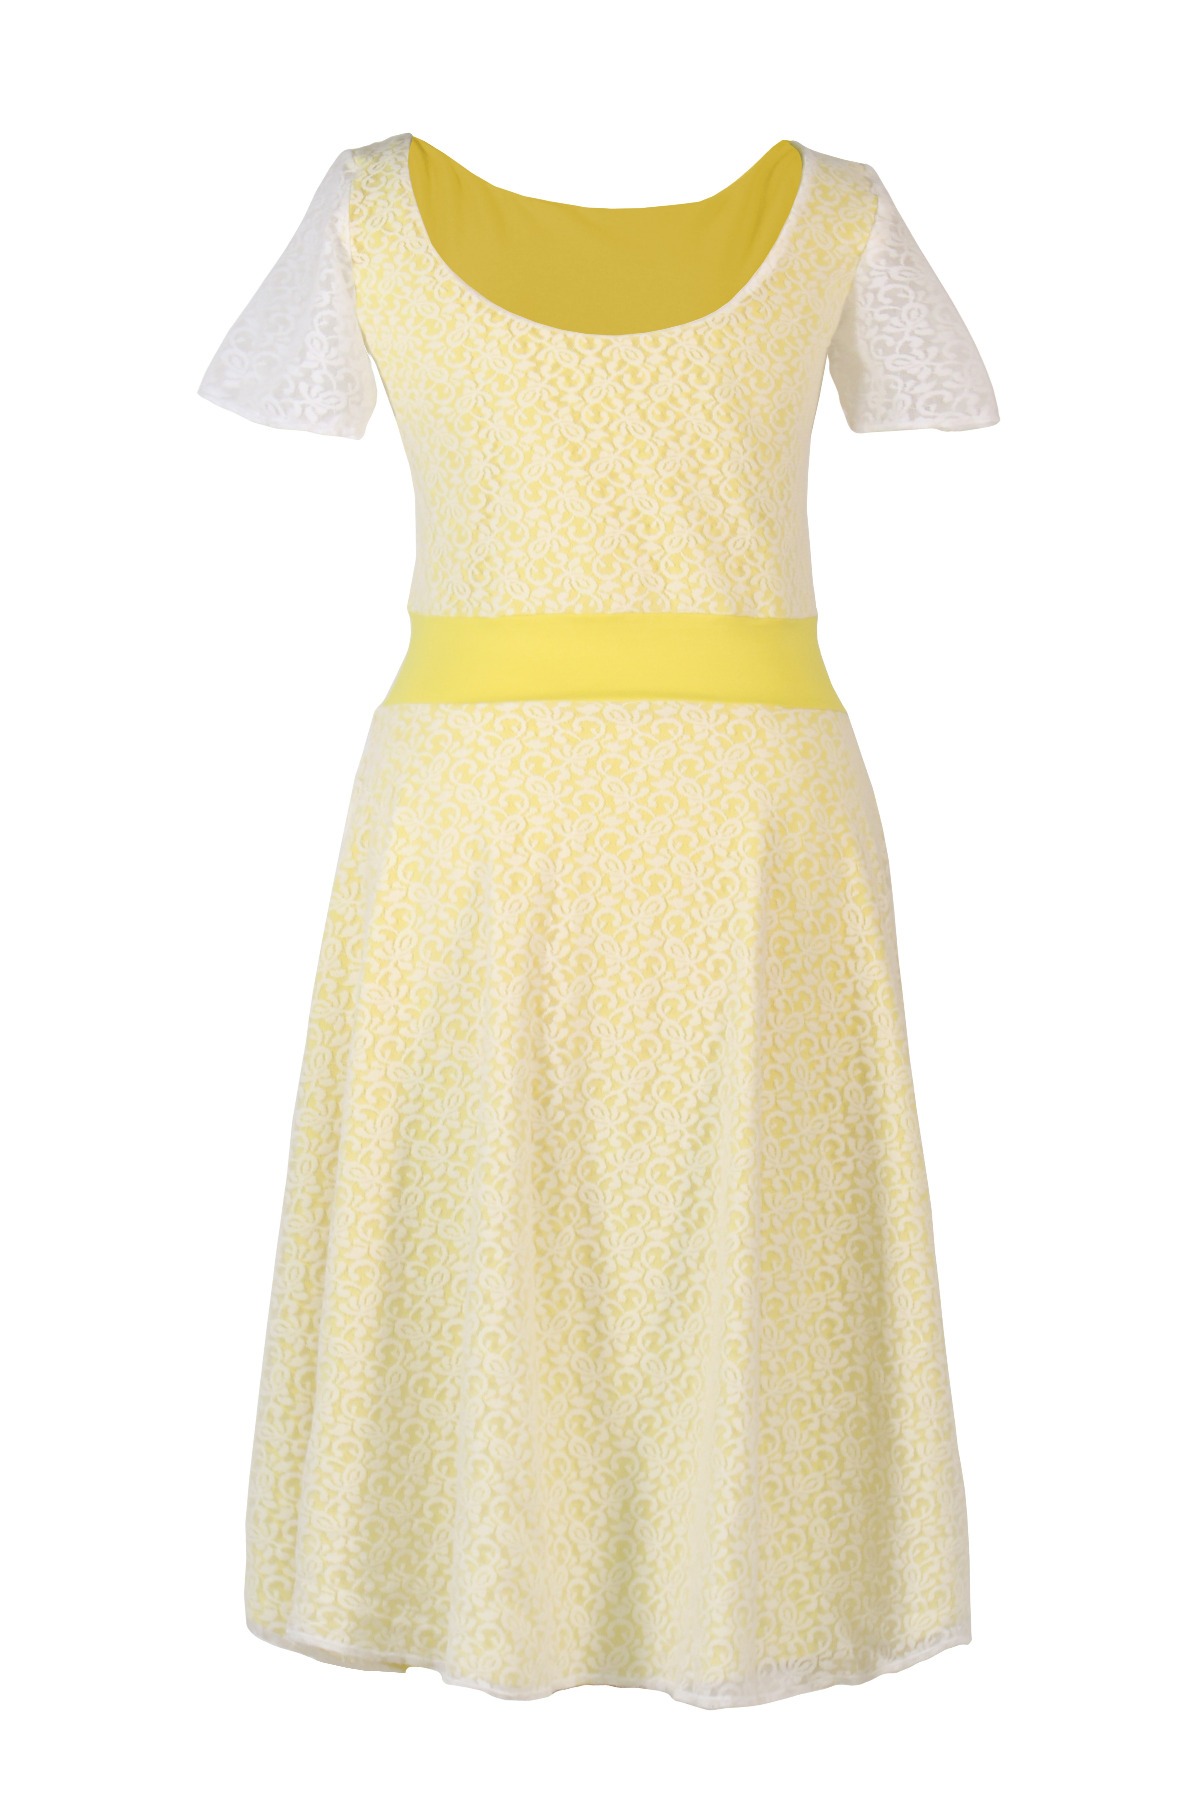 Organic dress Perle lemon yellow + white 2